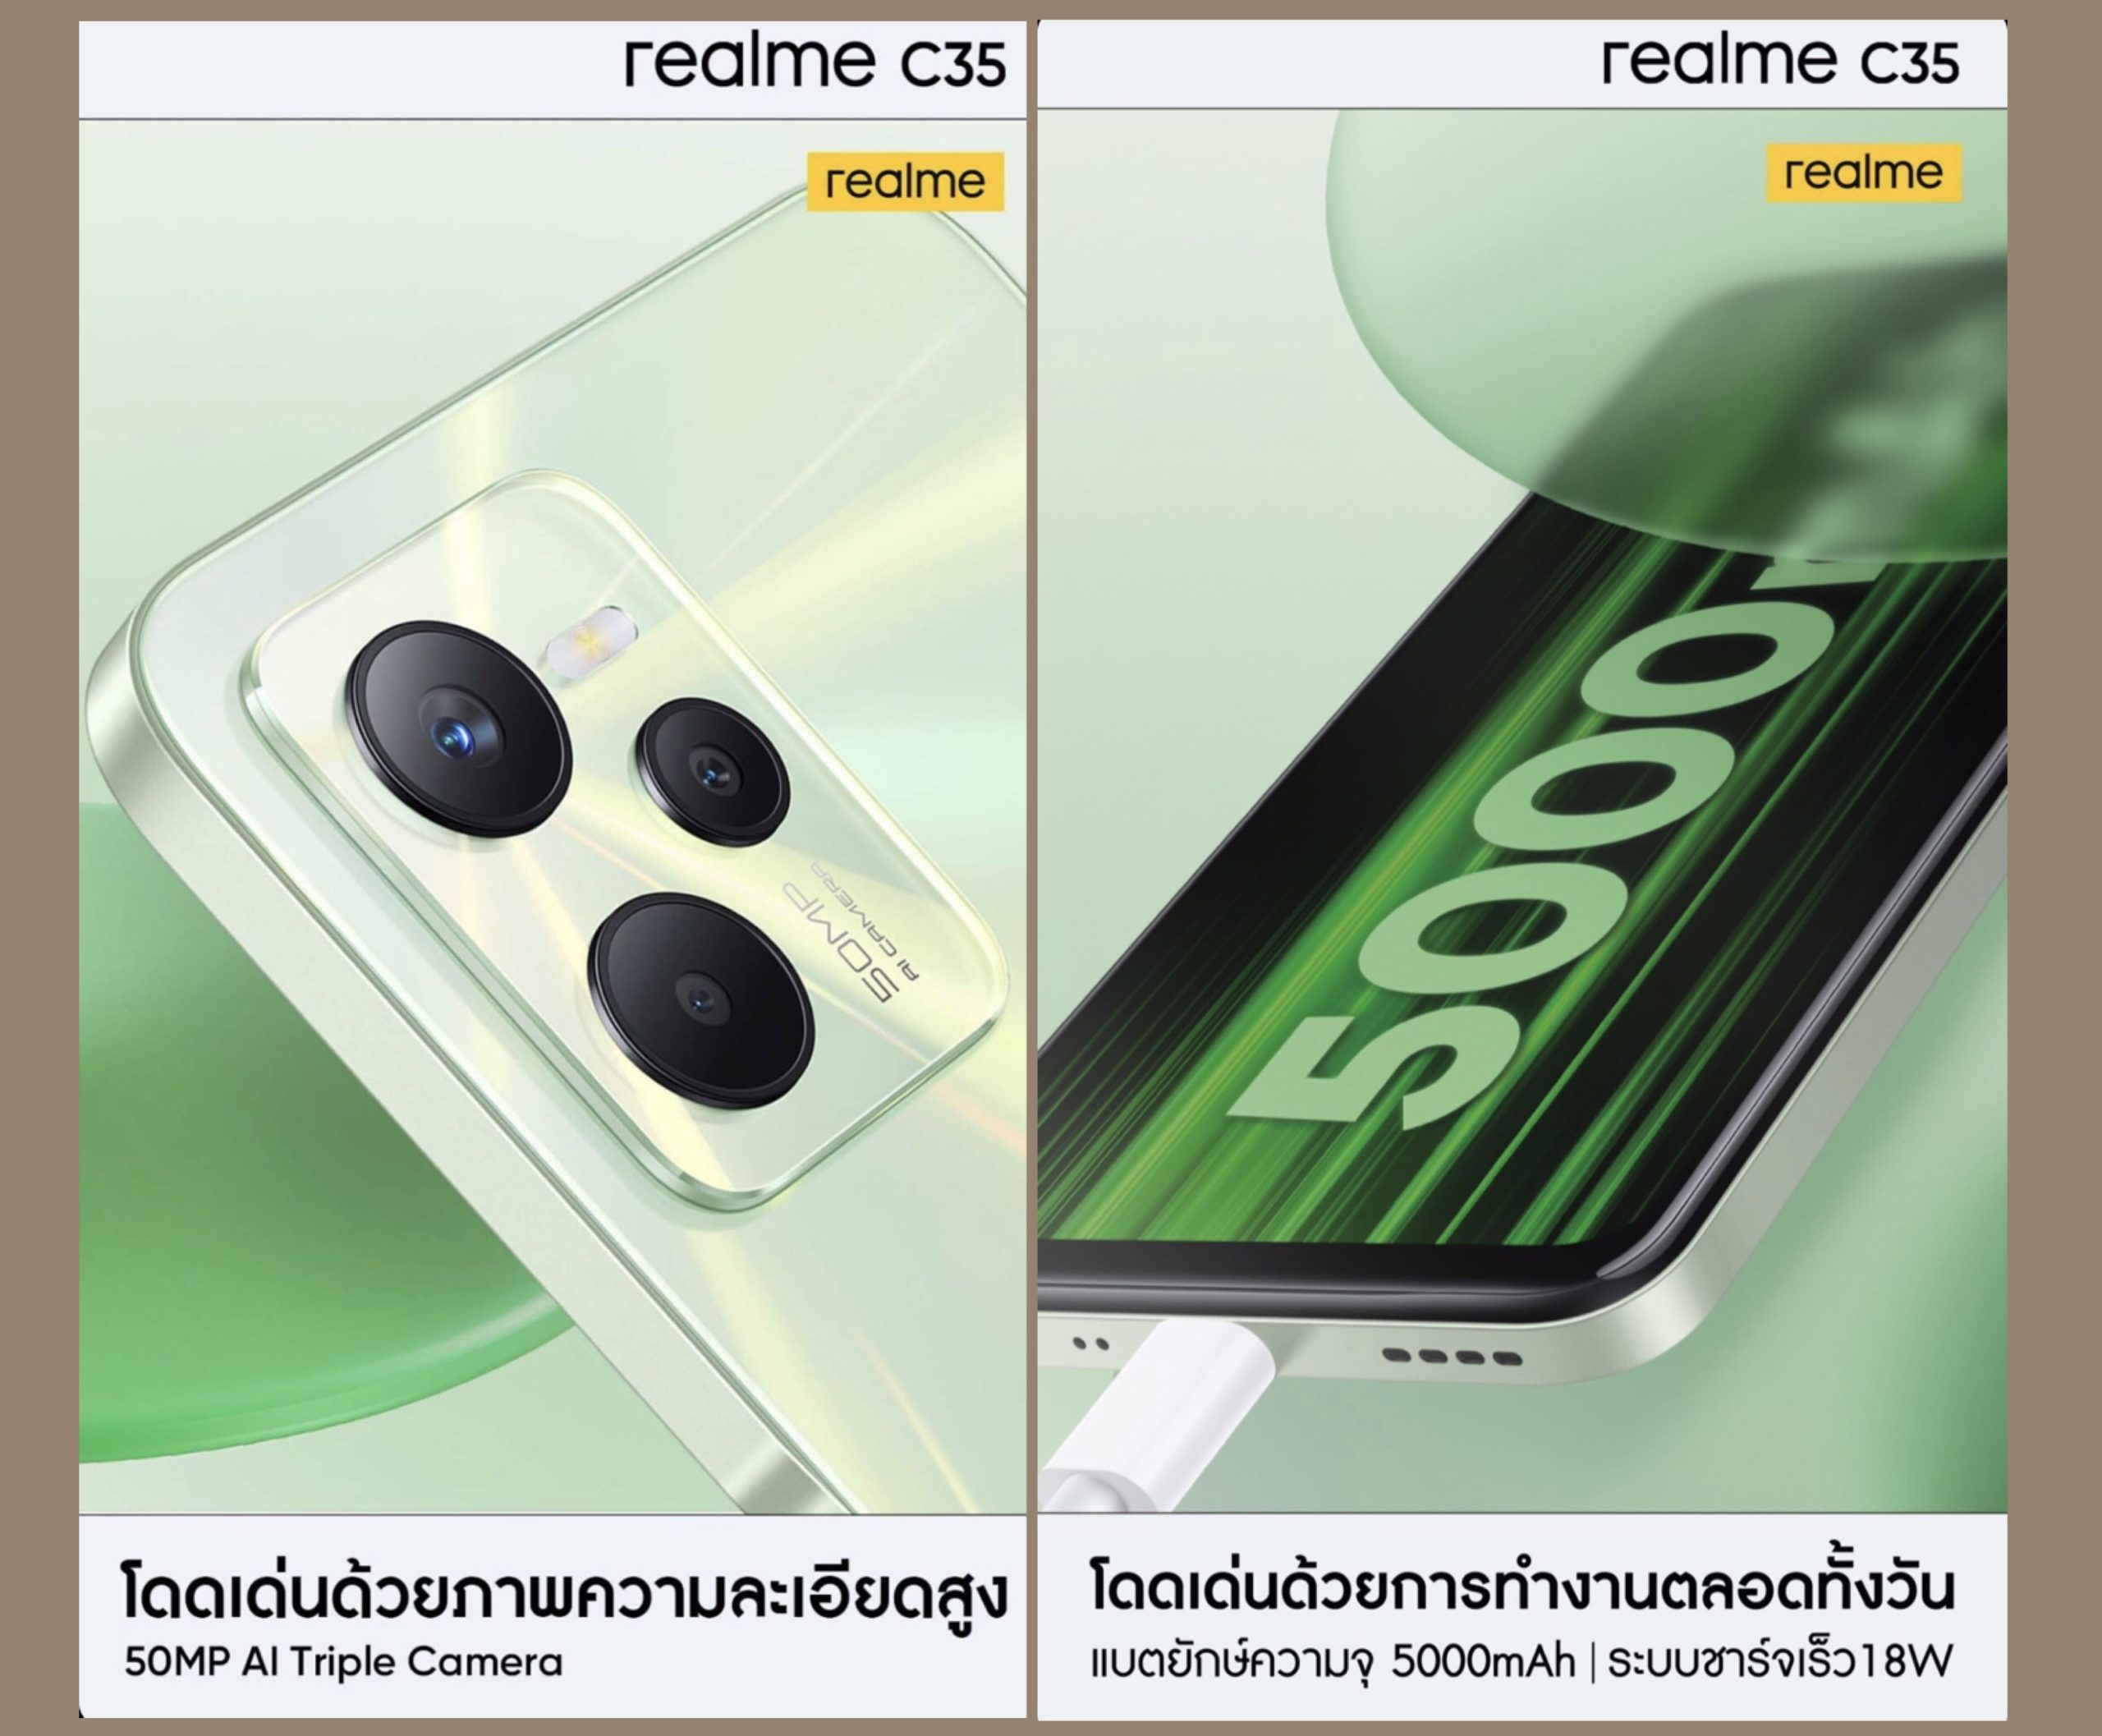 realme C35 bakal dilancarkan pada 10 Februari ini - design macam iPhone 6